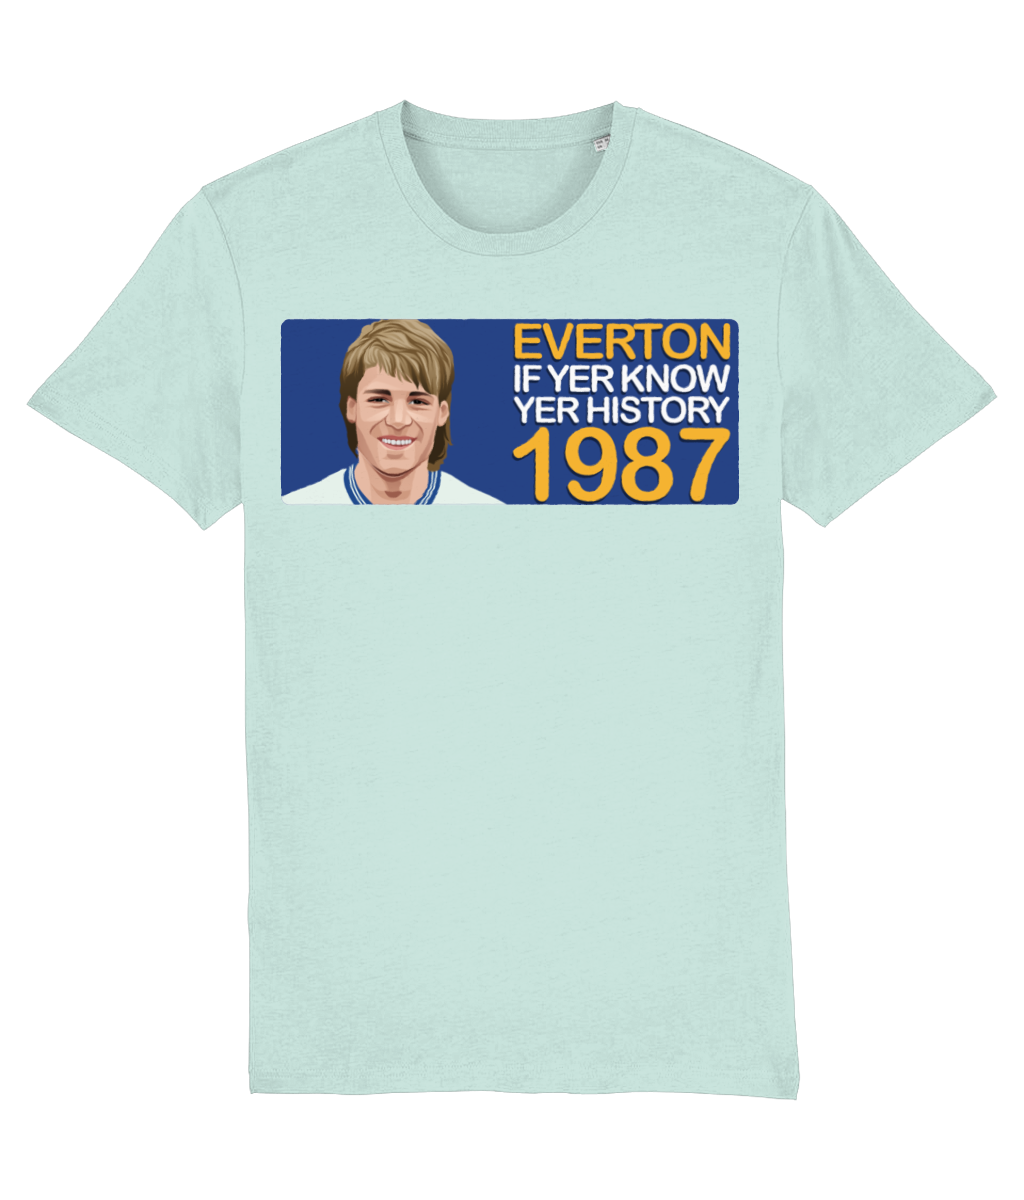 Everton 1987 Pat van den Hauwe If Yer Know Yer History Unisex T-Shirt Stanley/Stella Retrotext Caribbean Blue X-Small 